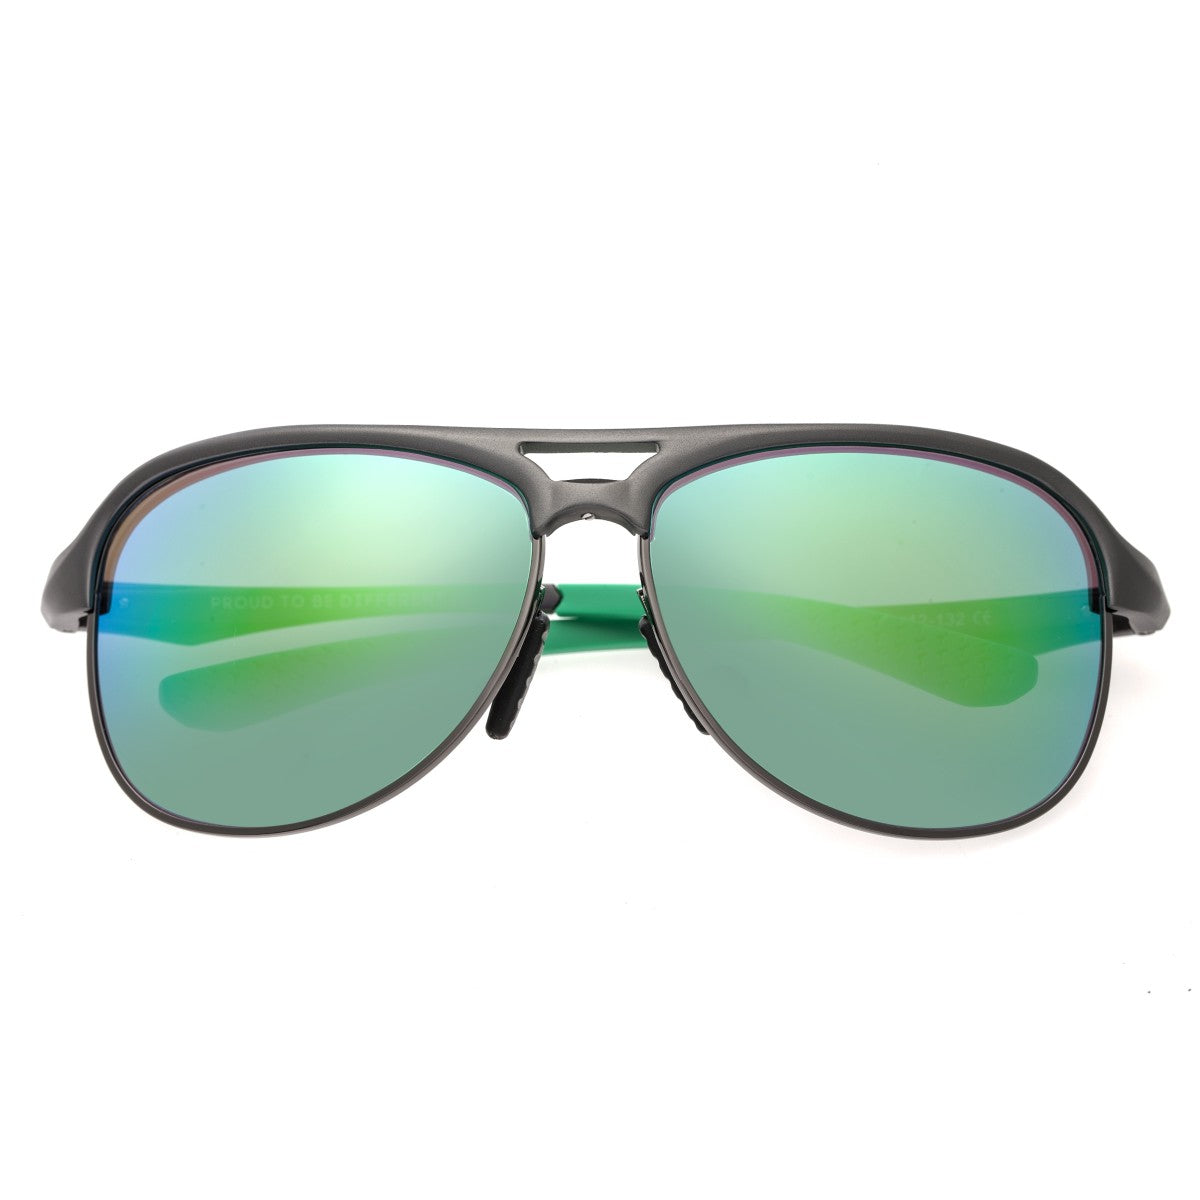 Breed Jupiter Aluminium Polarized Sunglasses - Gunmetal/Blue-Green - BSG019GM